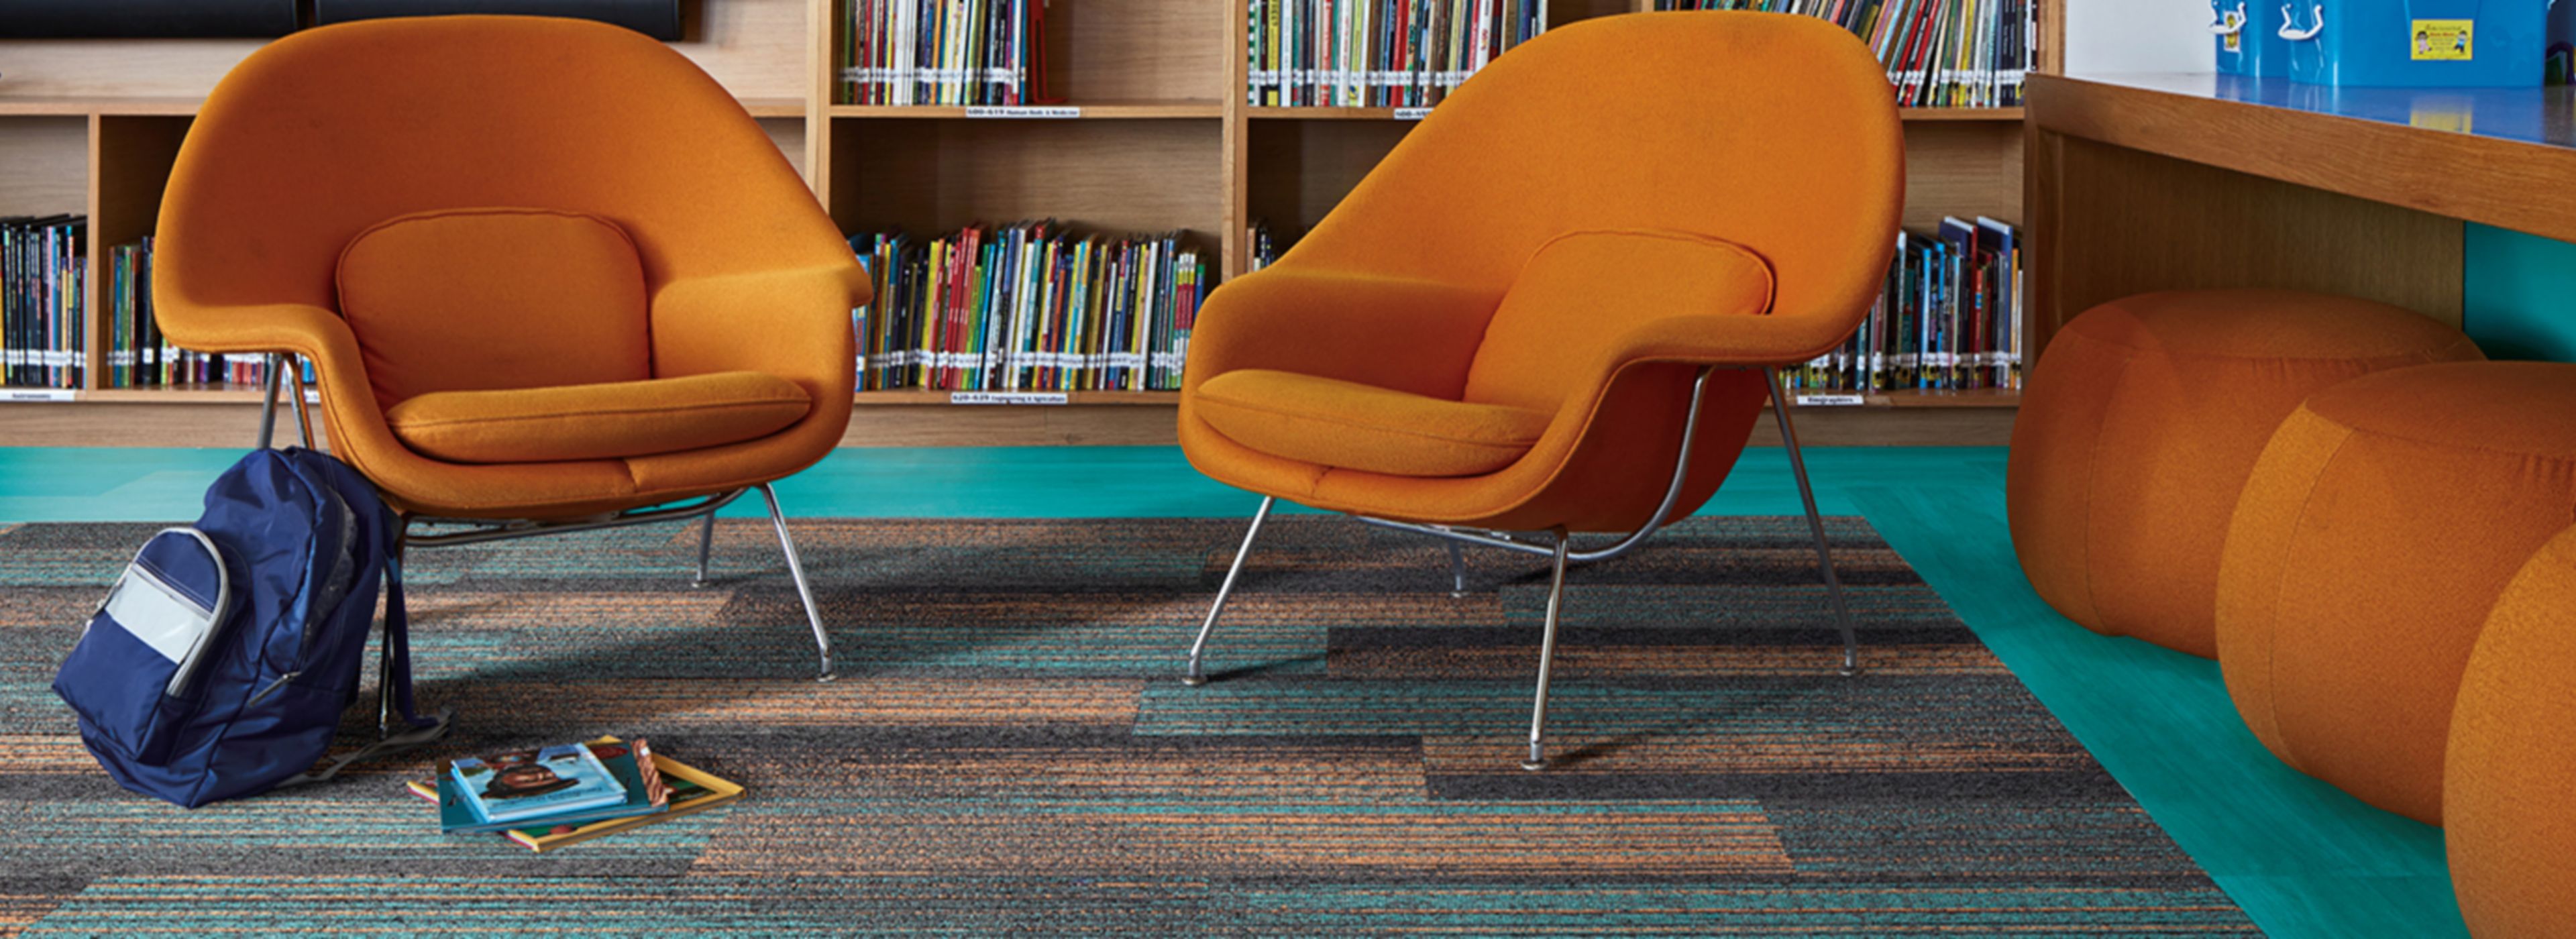 Interface Ground Waves Verse plank carpet tile and Studio Set LVT in library corner image number 1